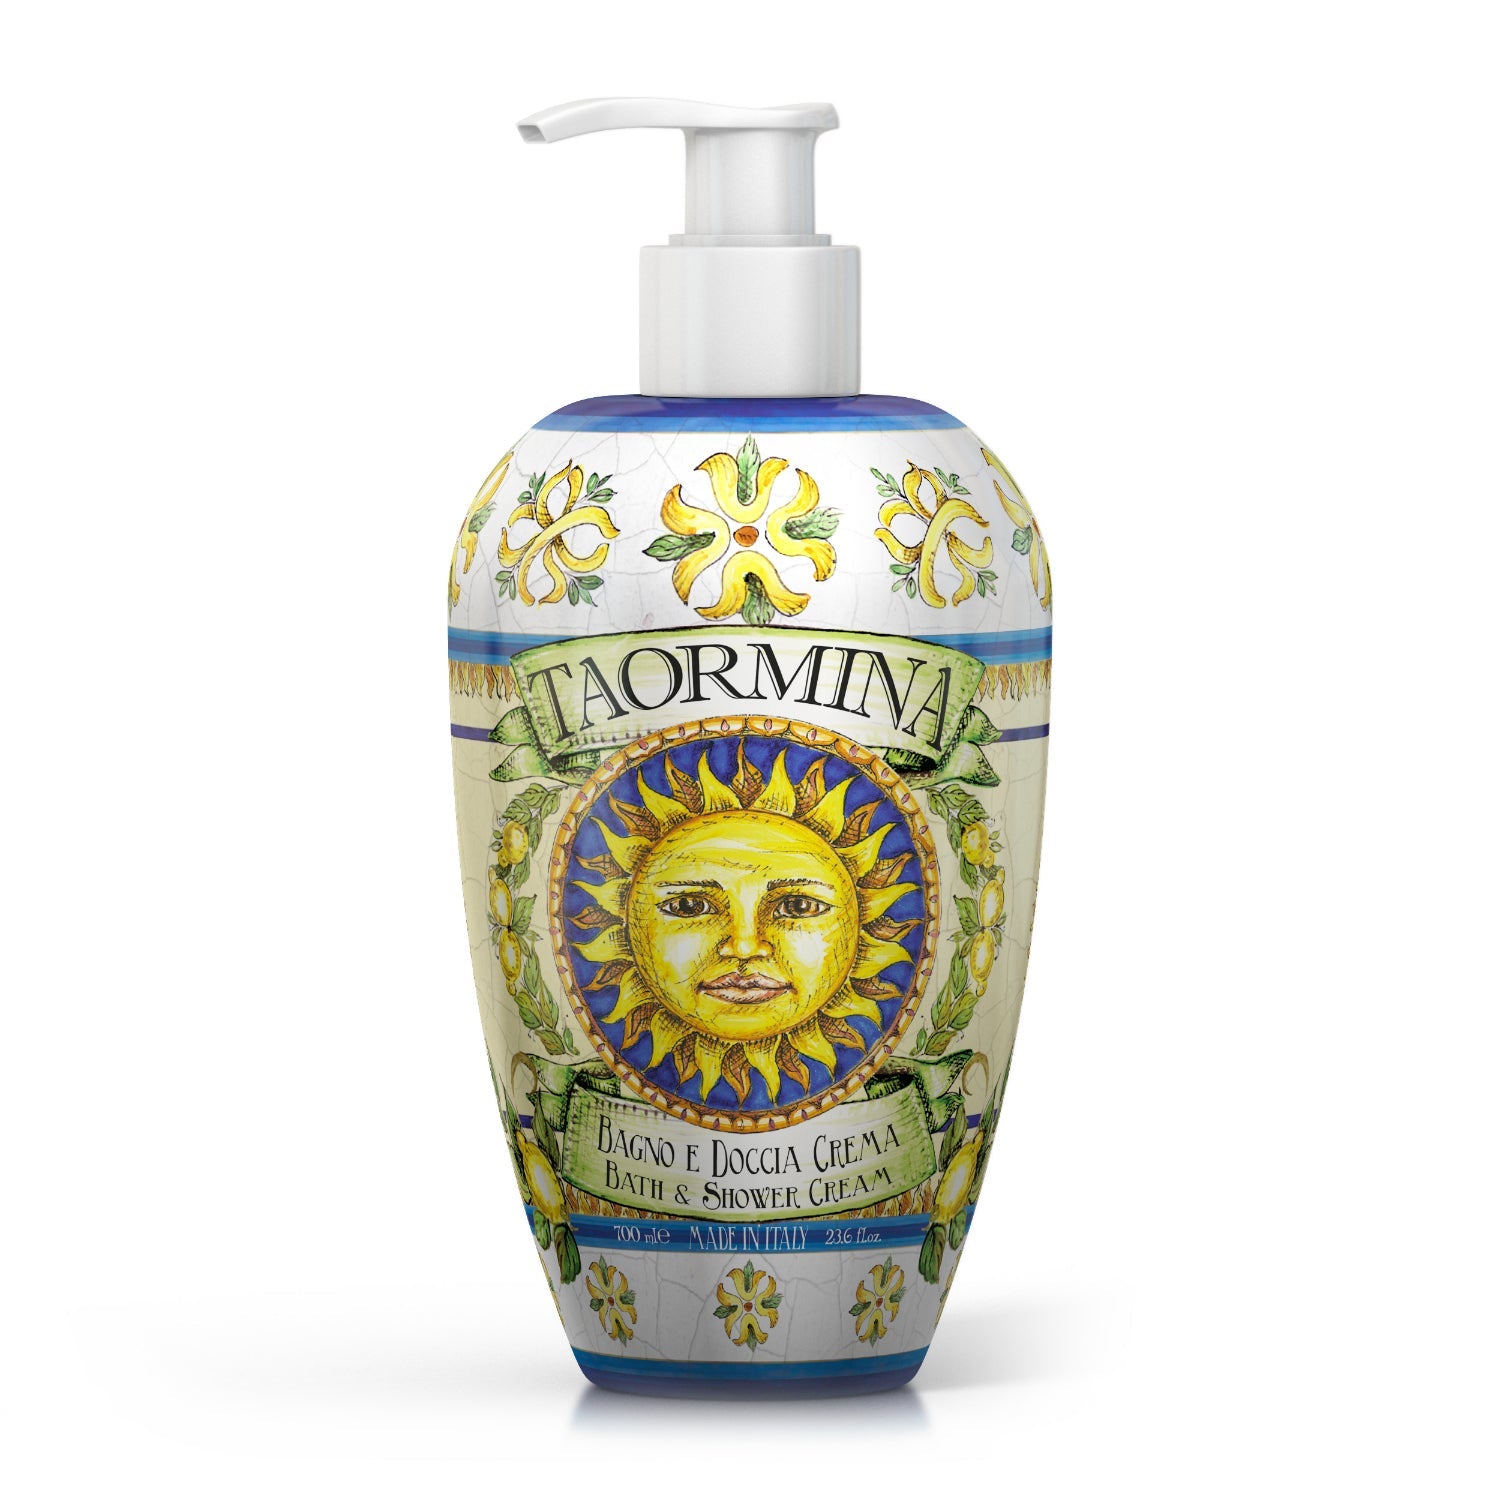 Bath & Shower Cream - Taormina